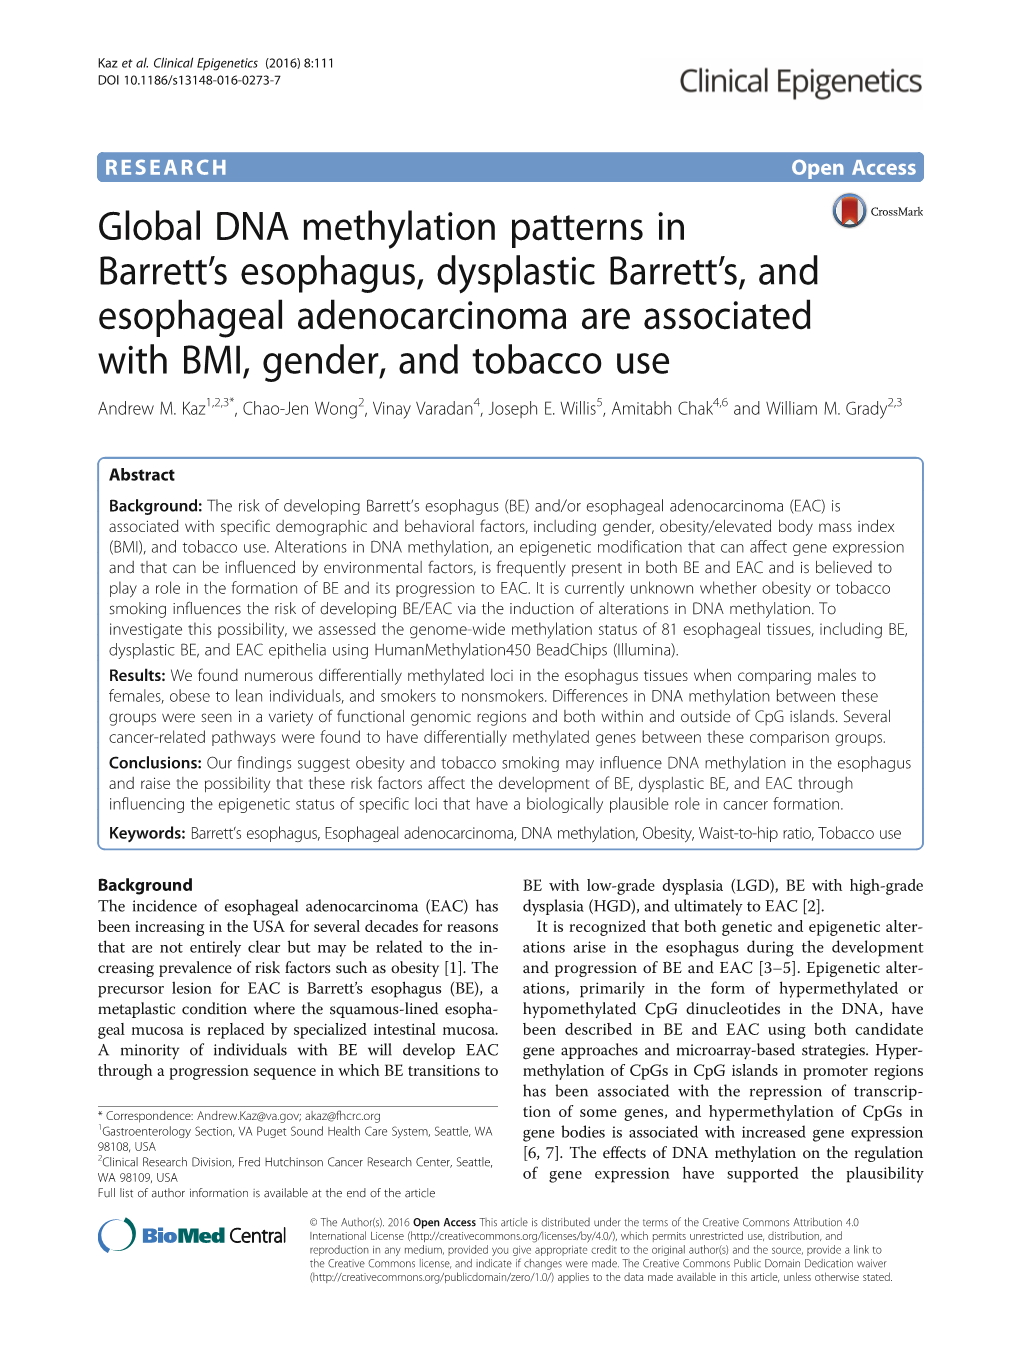 Global DNA Methylation Patterns in Barrett's Esophagus, Dysplastic